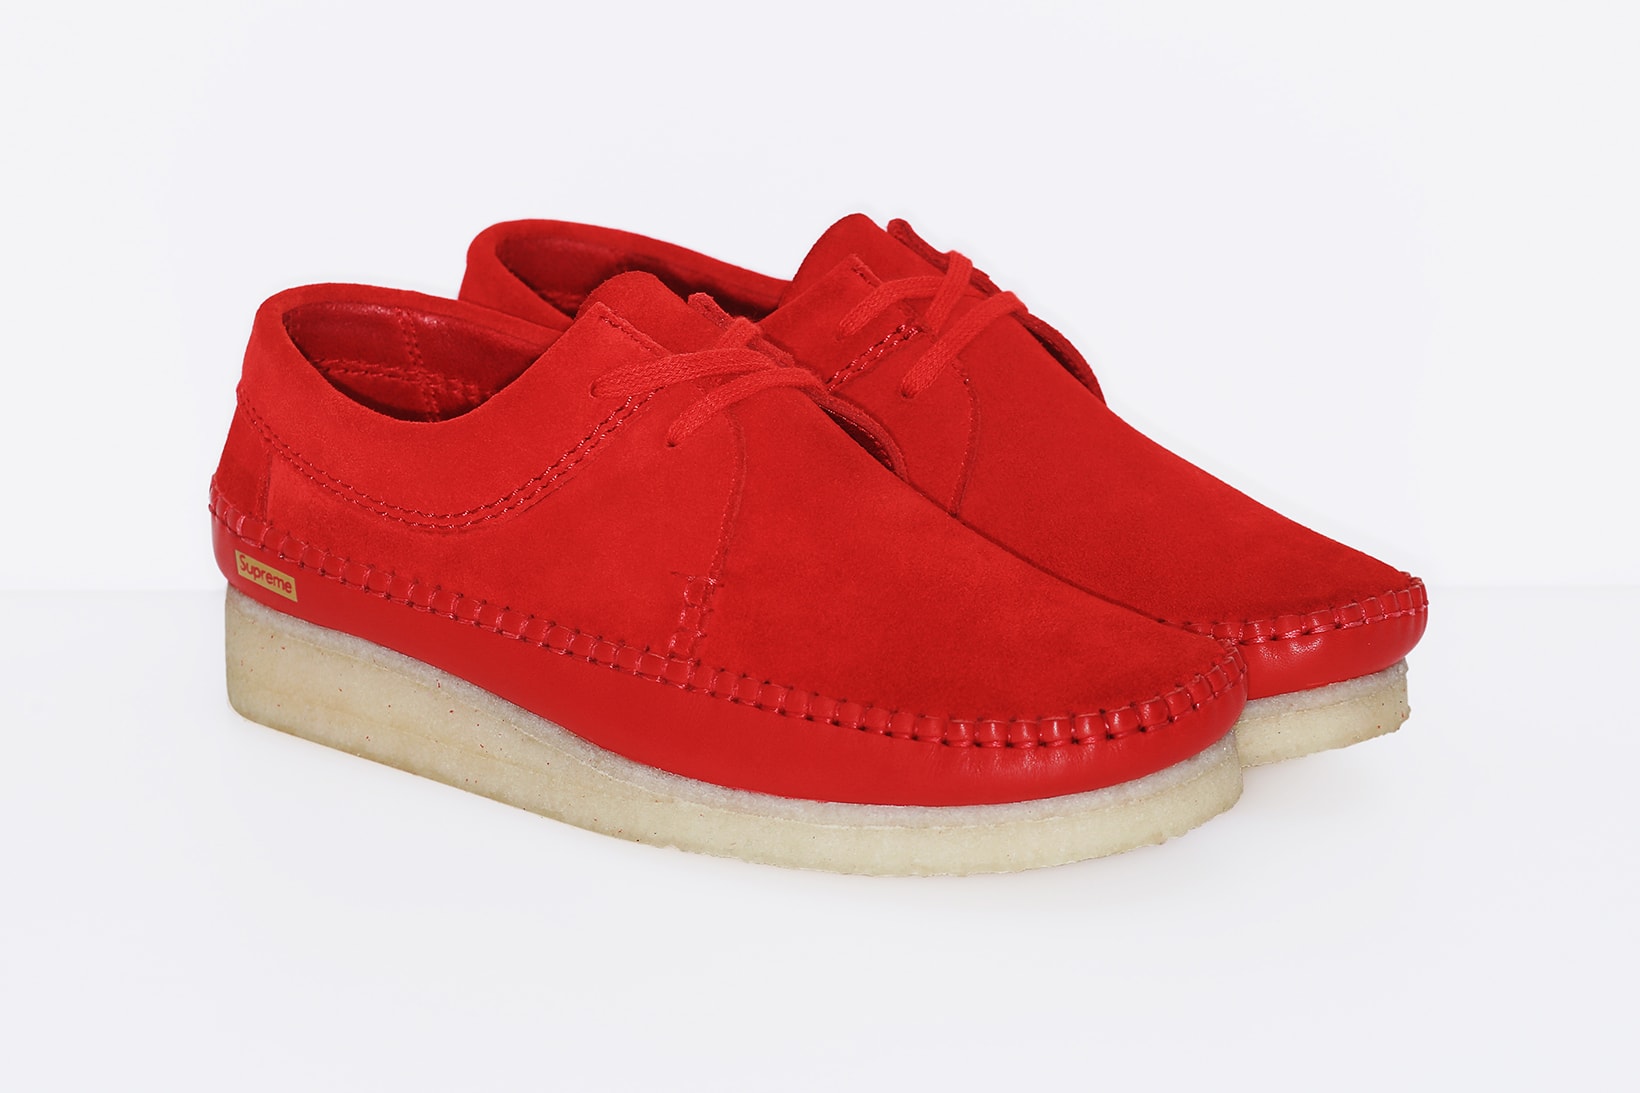 Supreme x Clarks Originals Weaver Shoe Collaboration Red